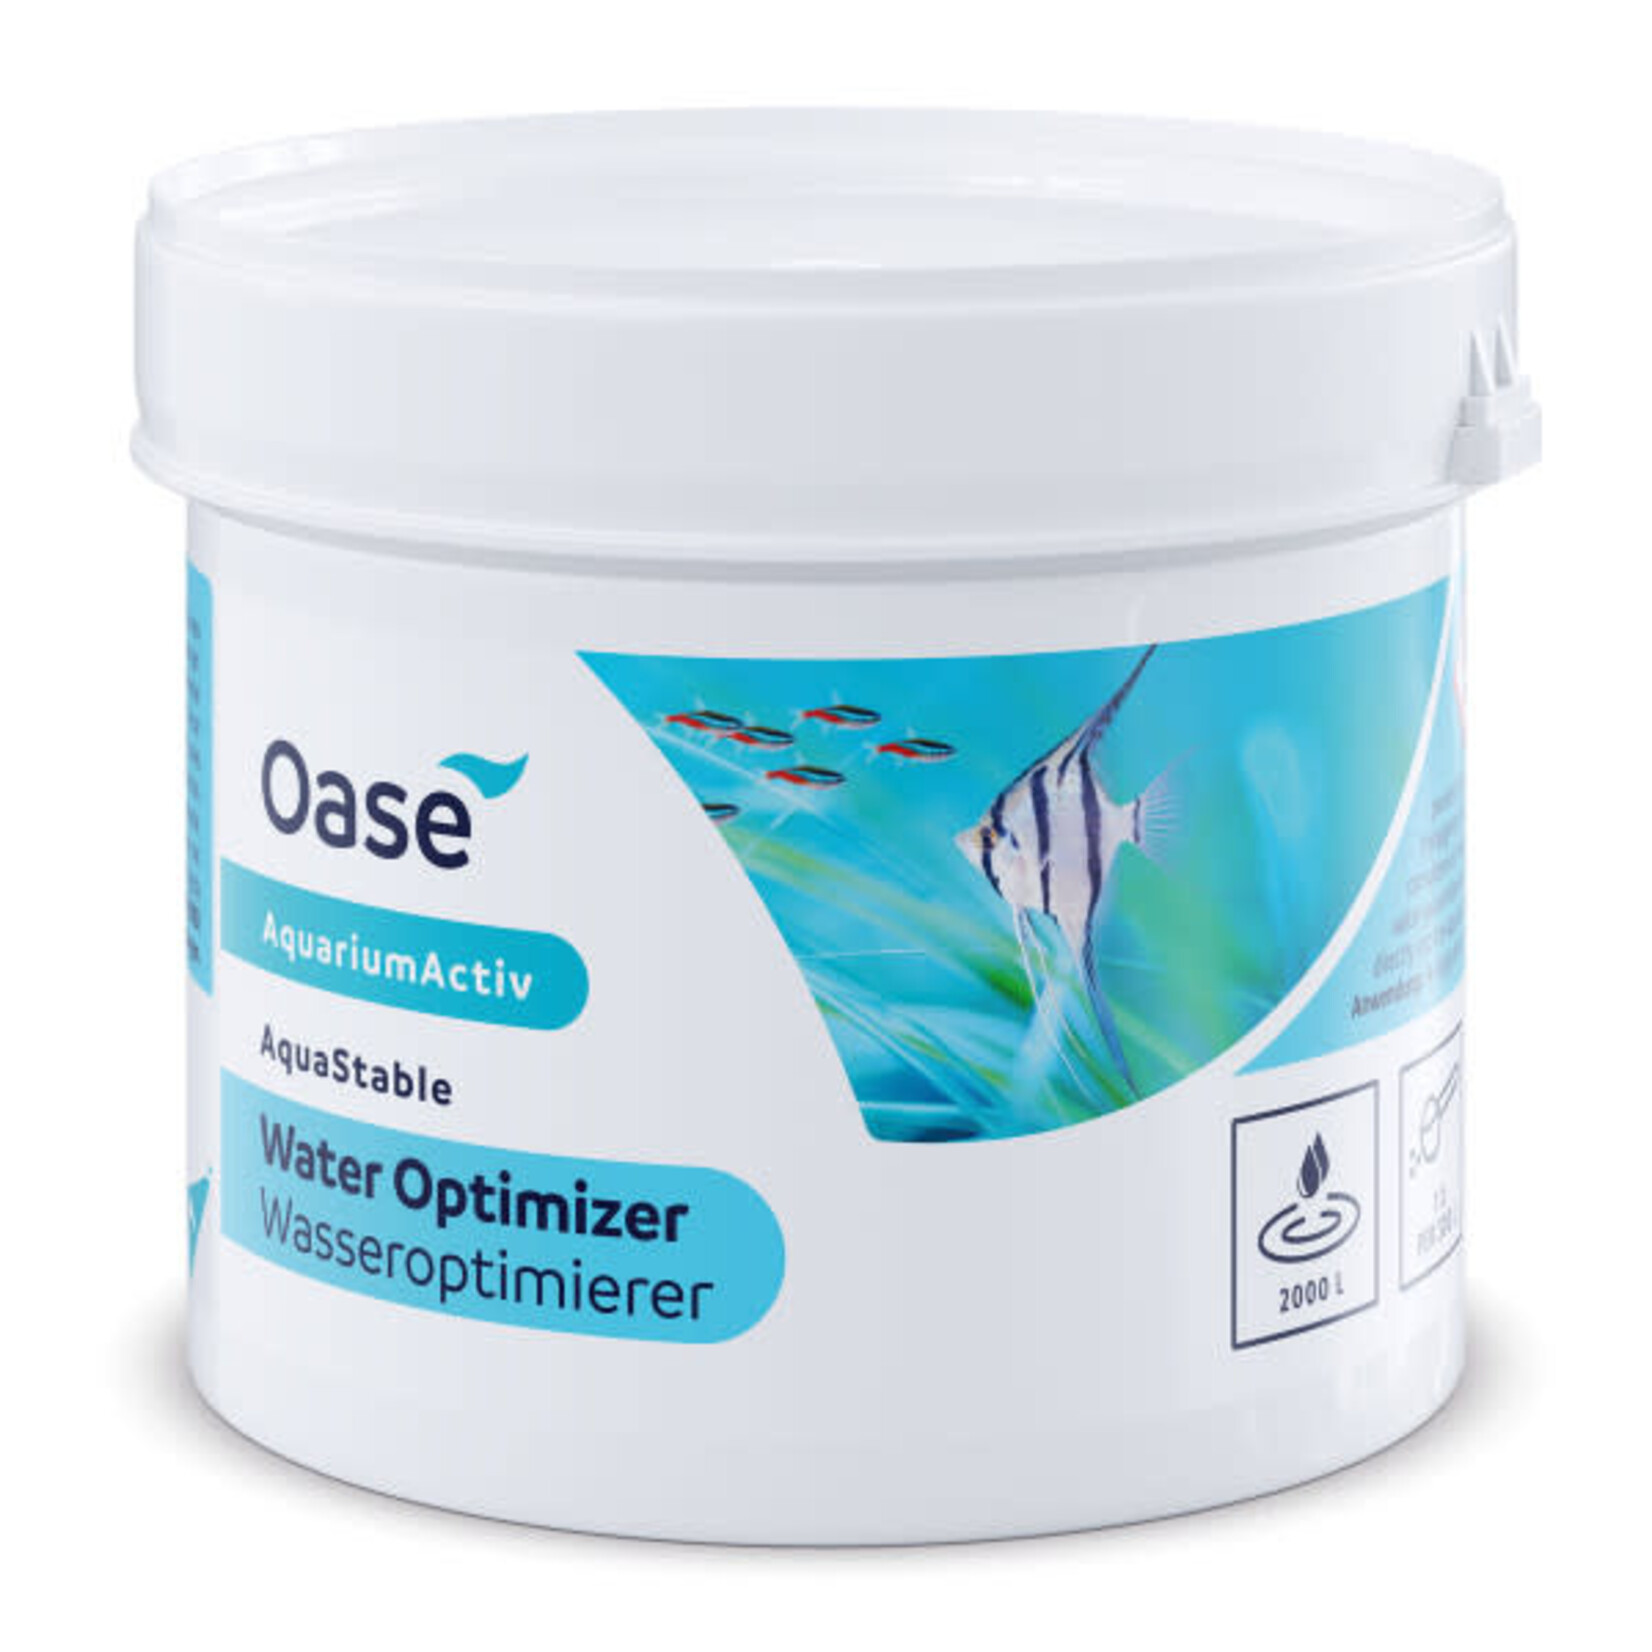 Oase AquaStable Water Optimizer 100 g